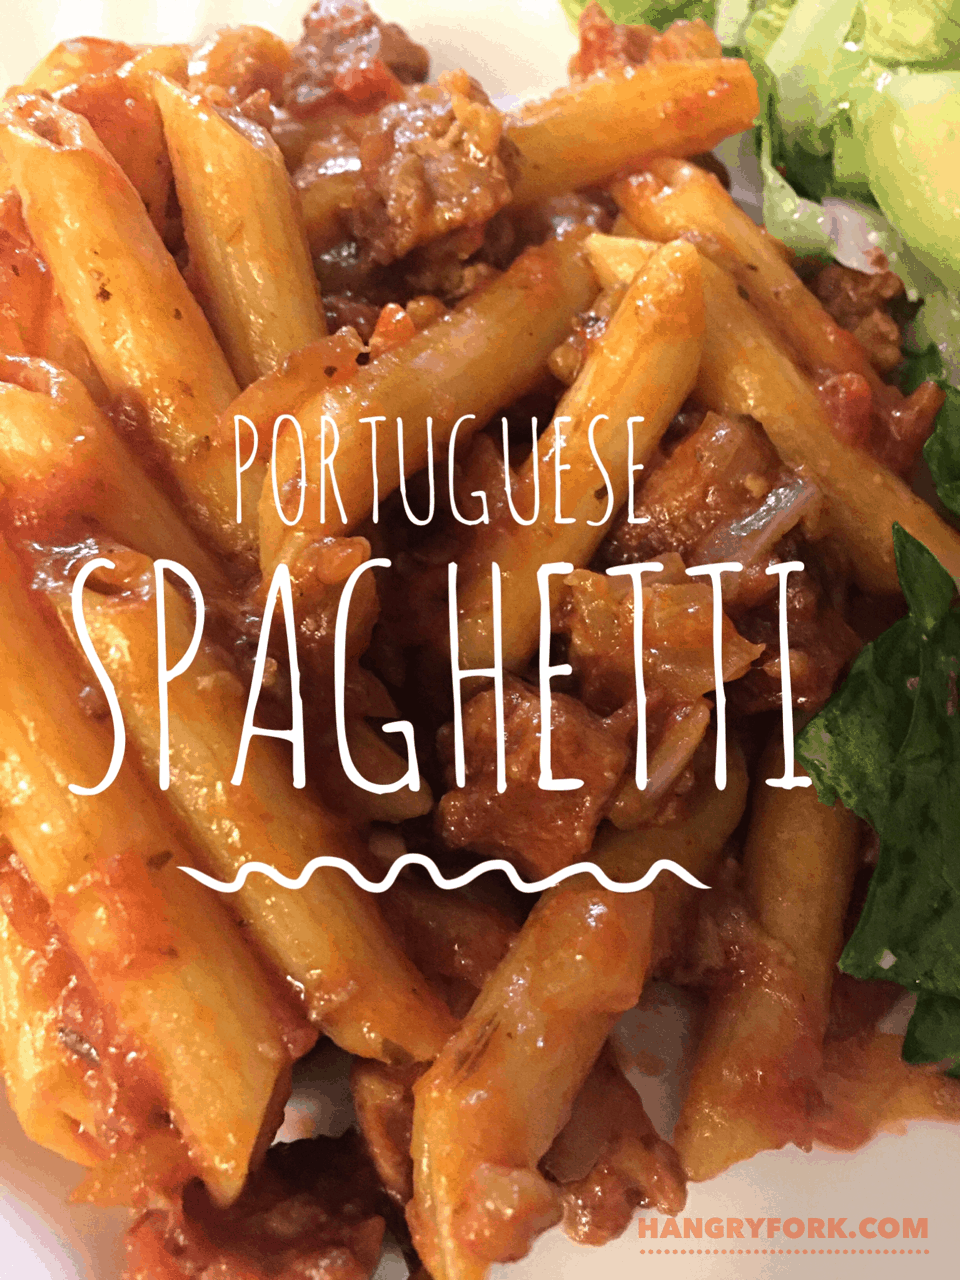 Portuguese Spaghetti - Linguica Sausage Pasta - Hangry Fork